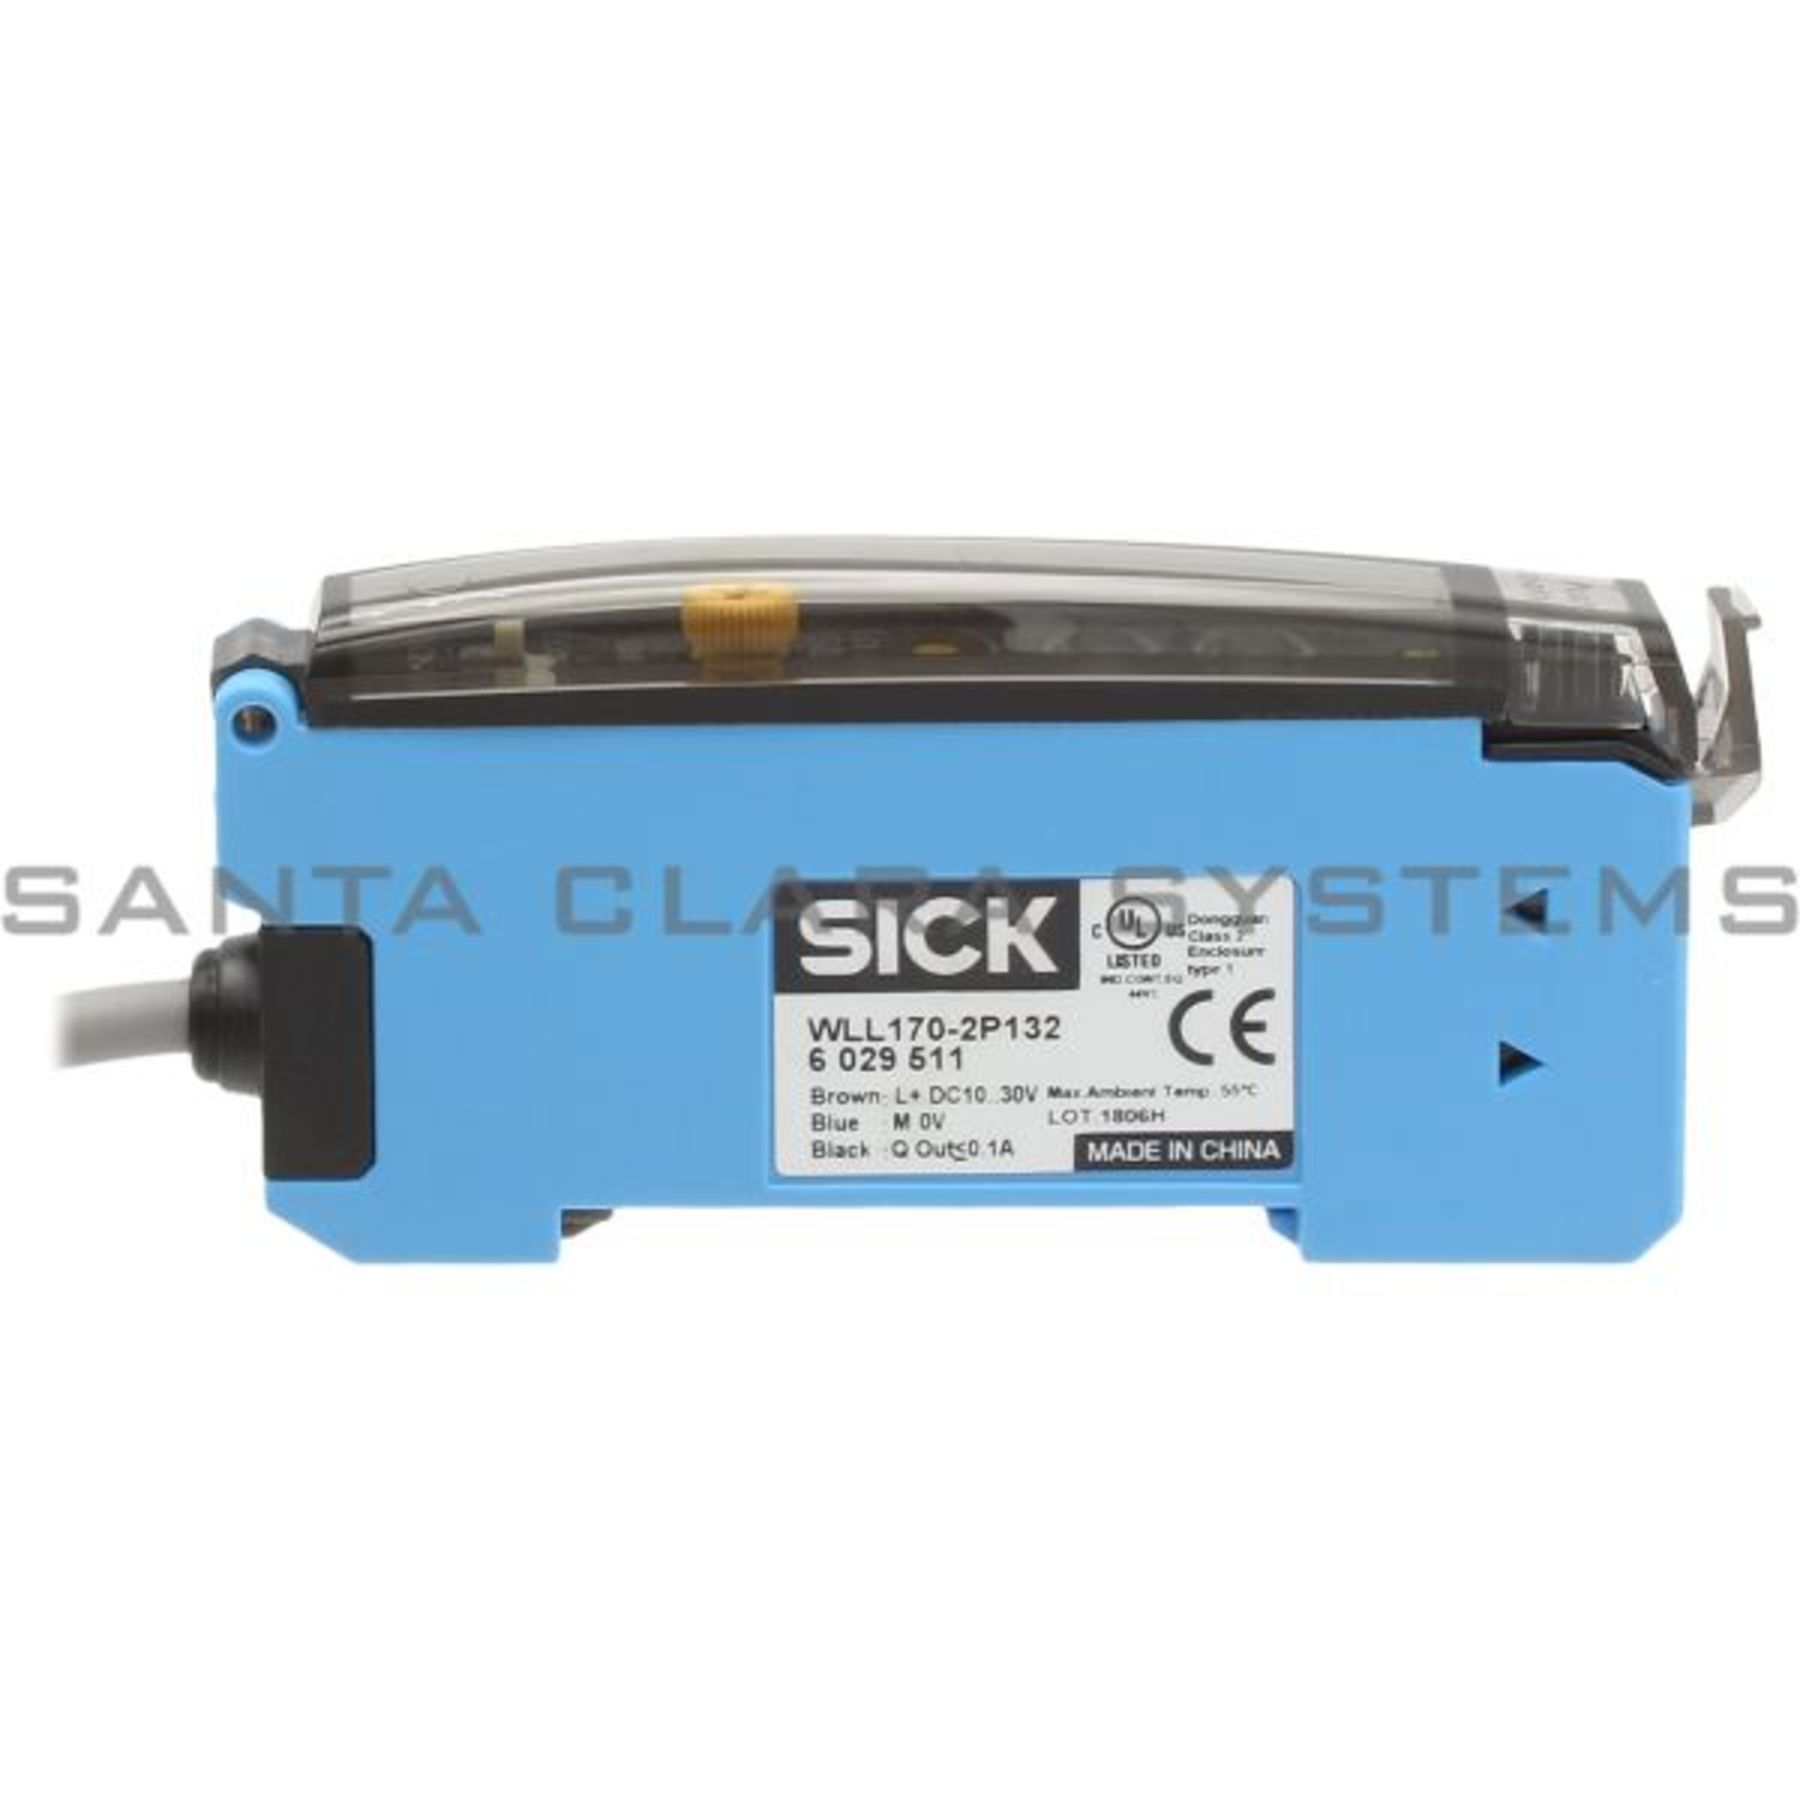 New In Box SICK WLL170-2P430 Fiber-optic Sensors 